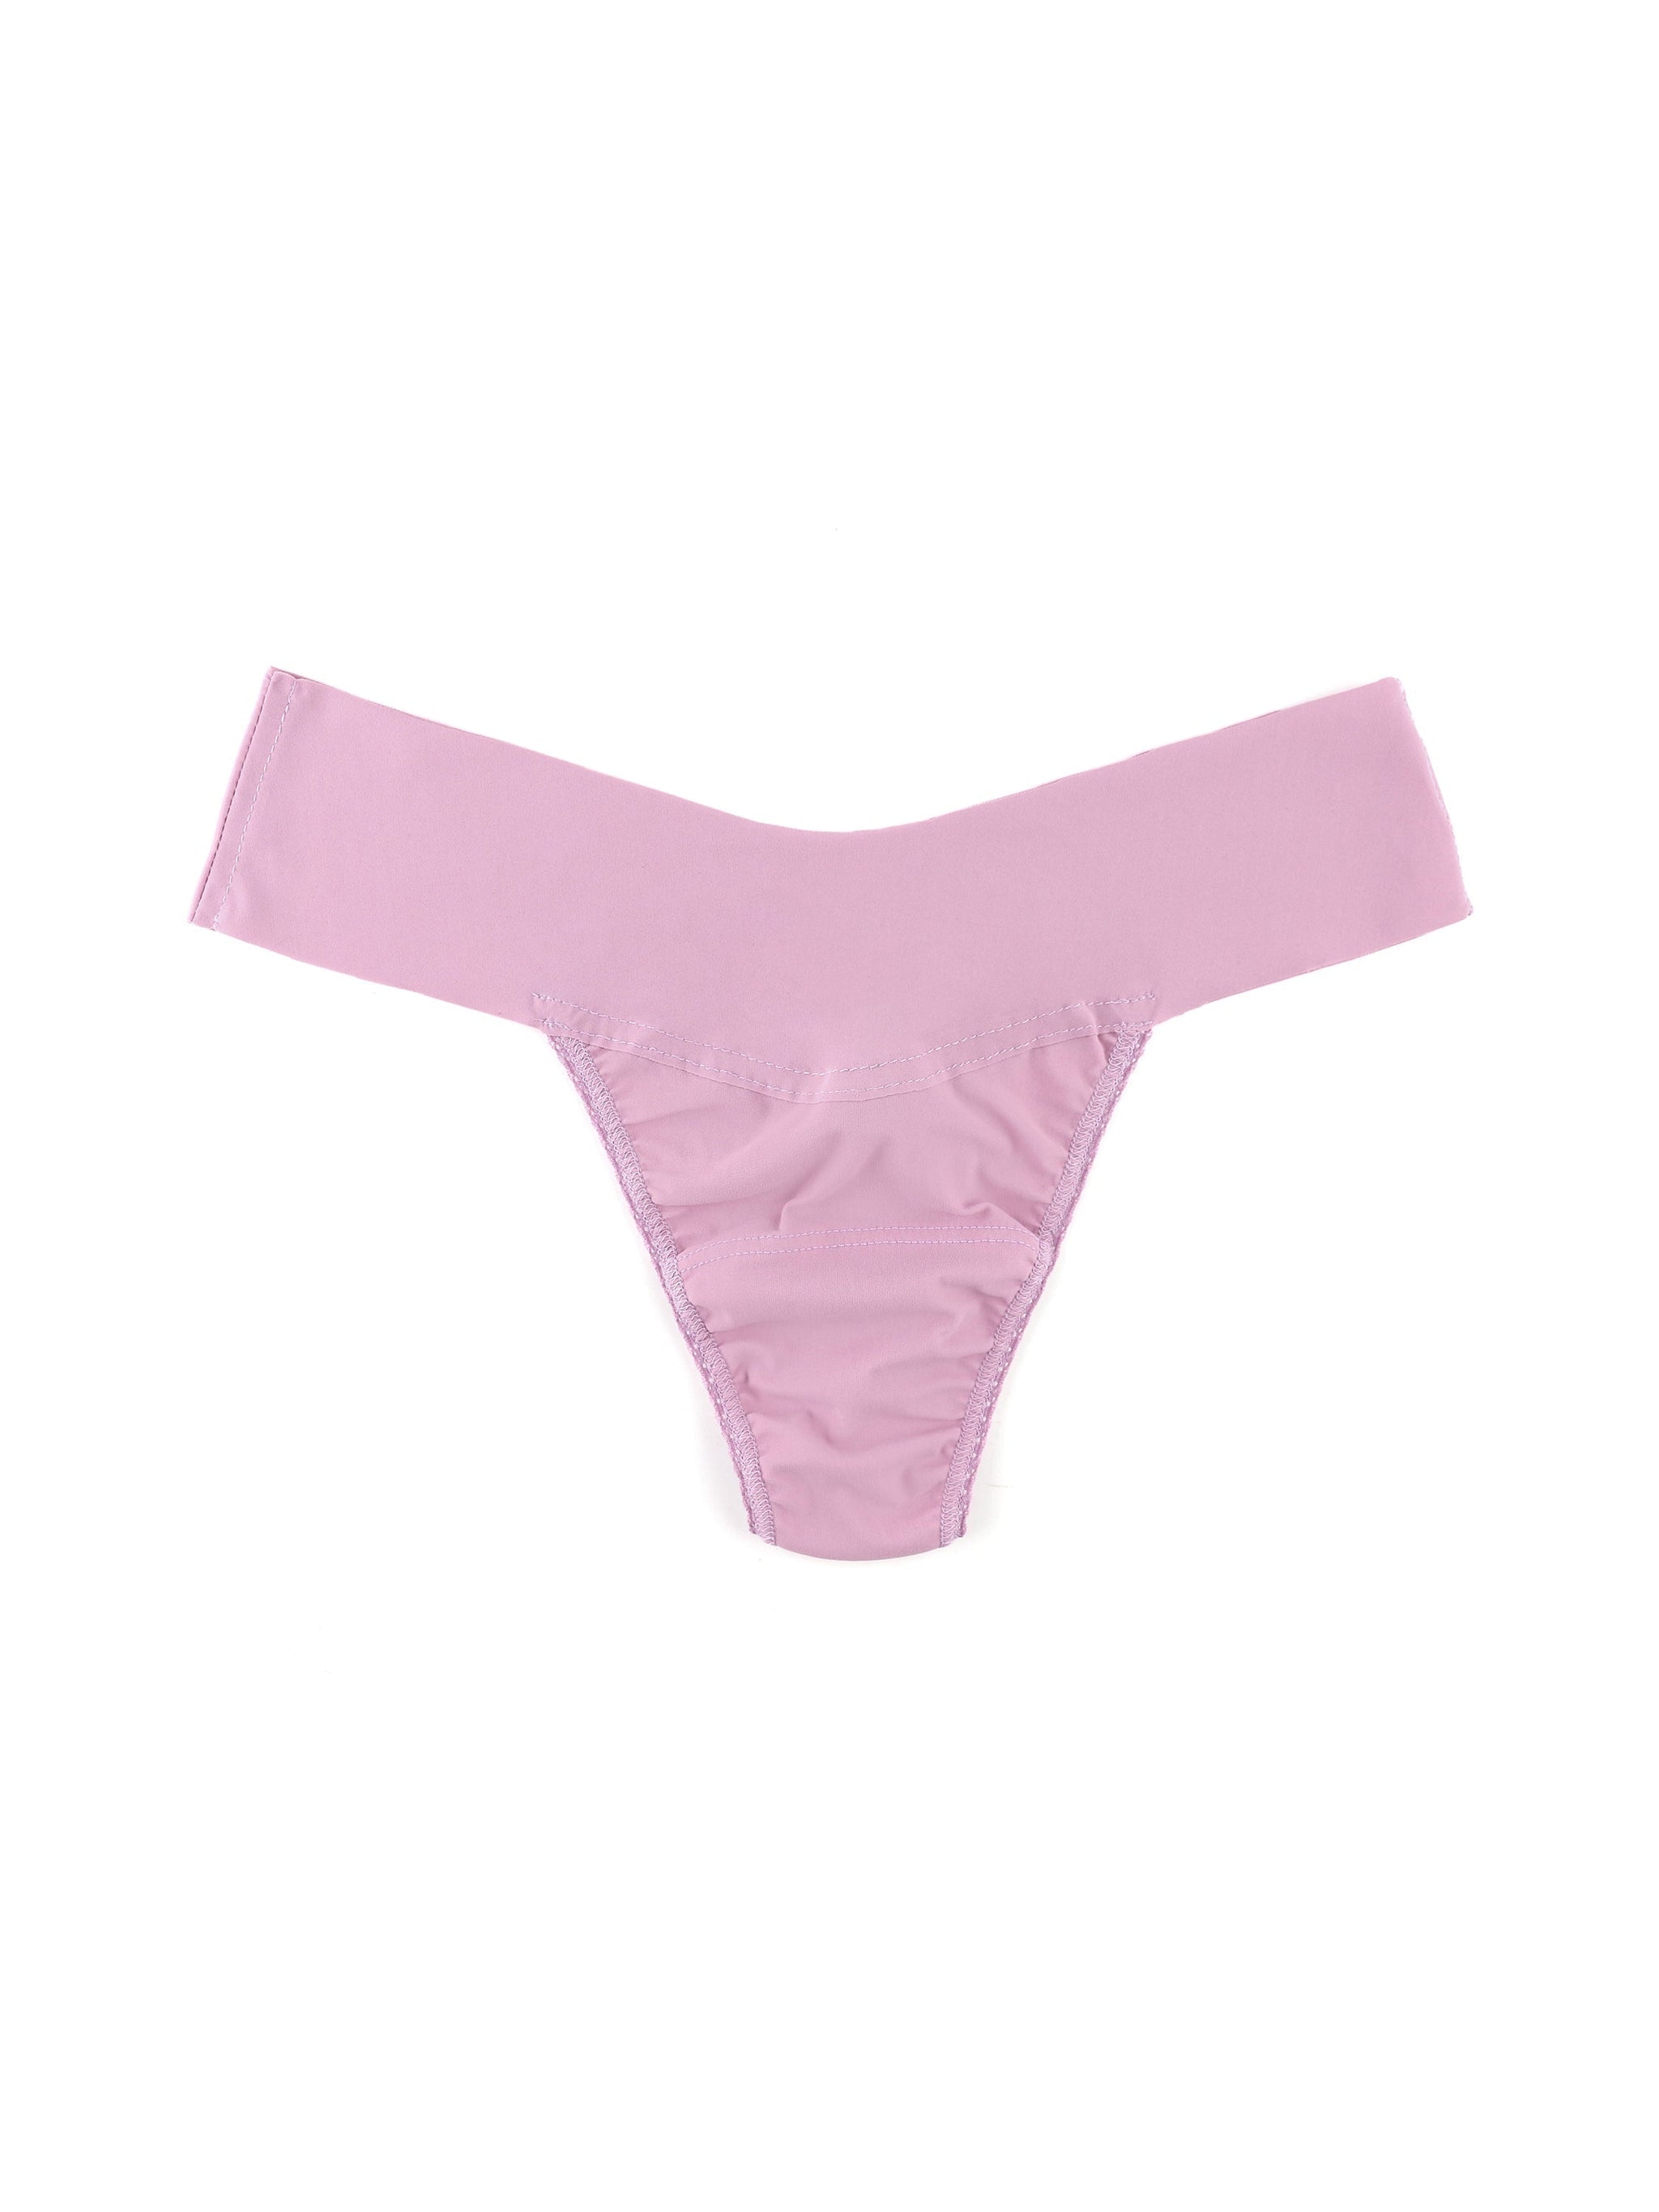 Seamless Thong Panty - Dusty pink